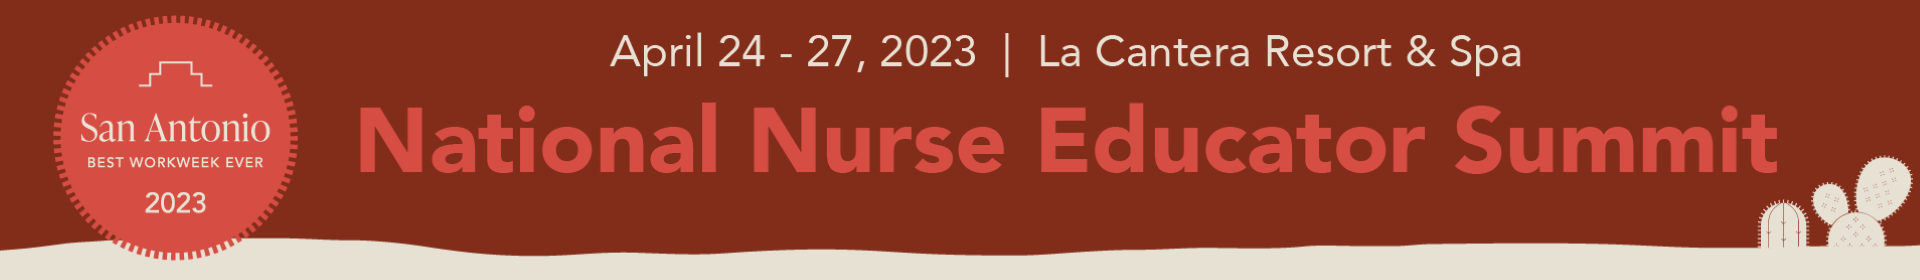 2023 National Nurse Educator Summit Event Banner